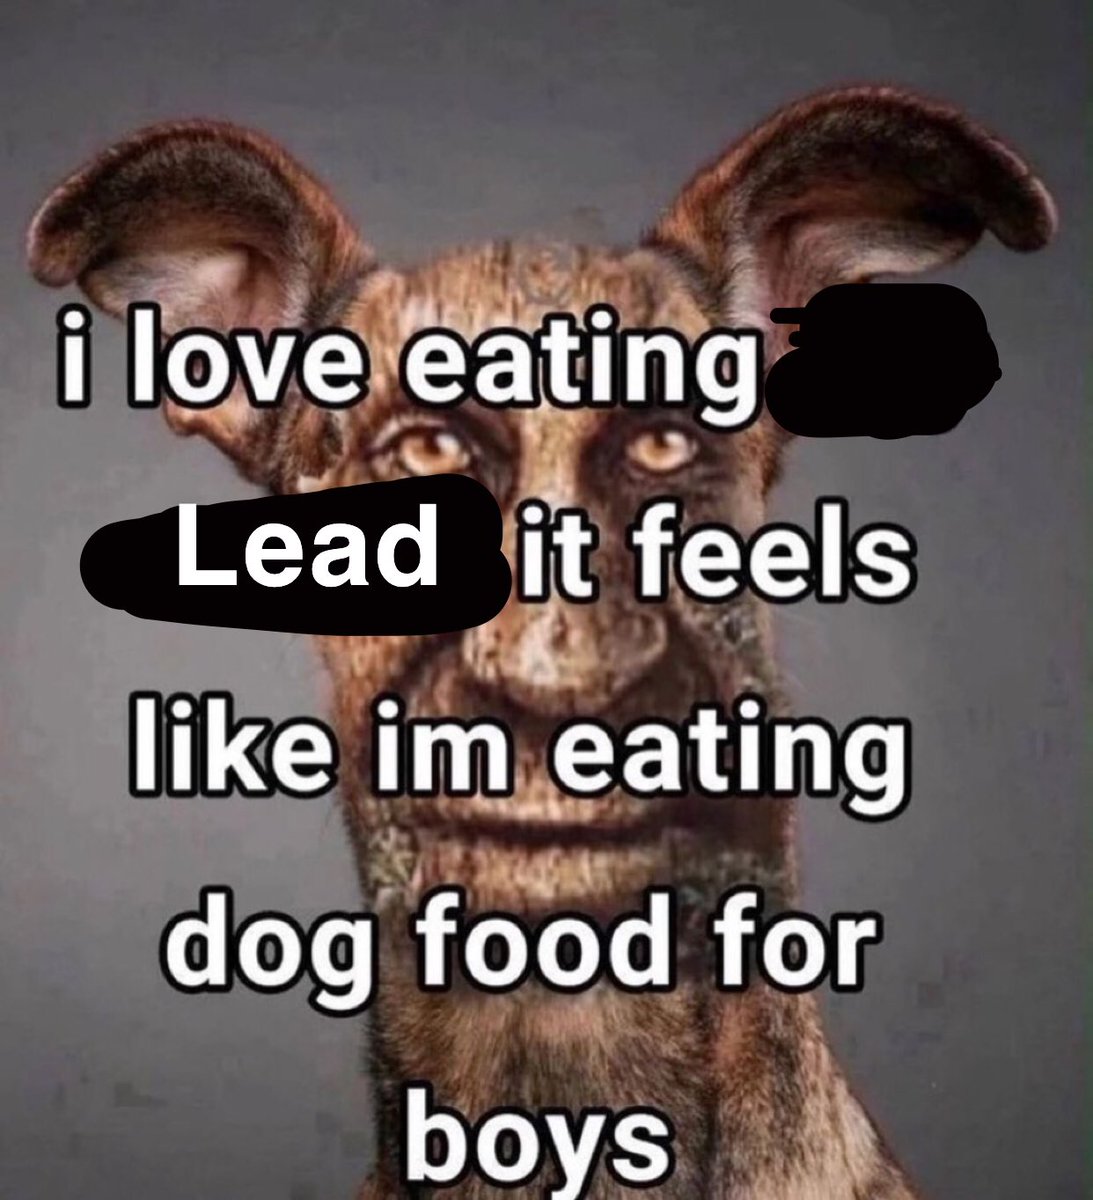 @zoomeralt dog food for boys